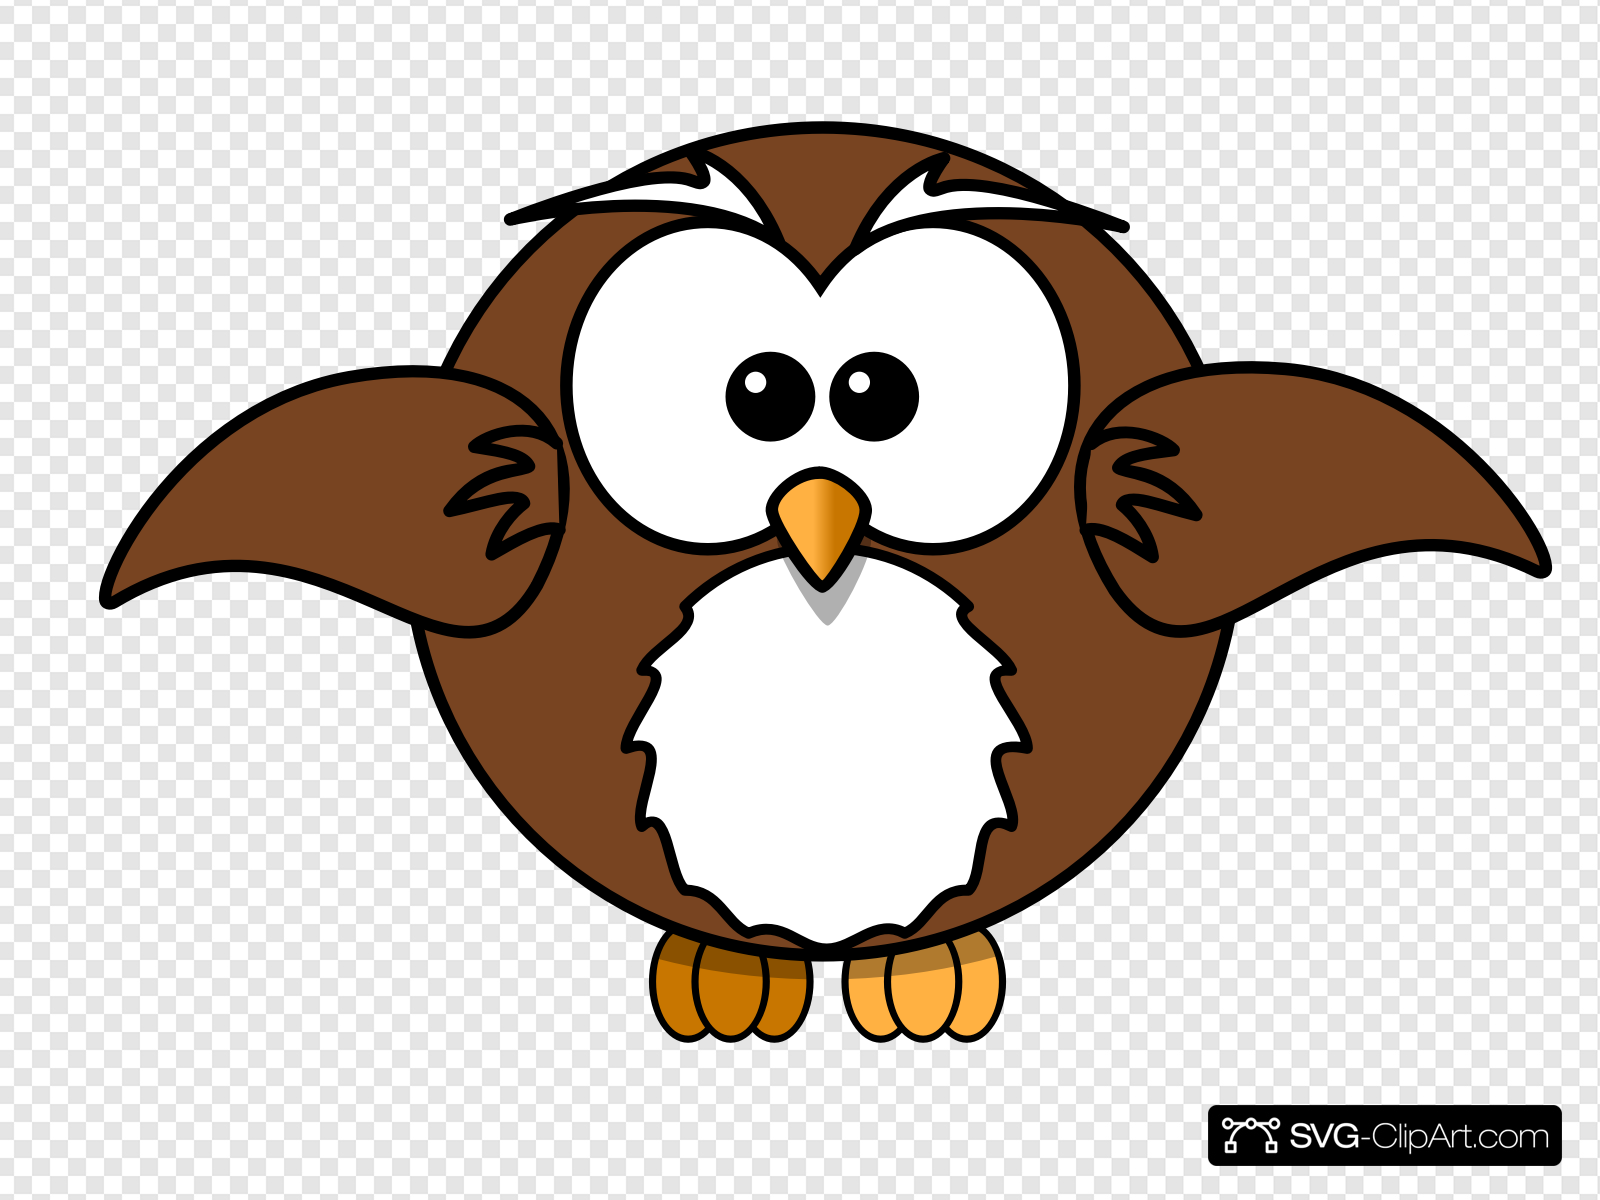 Big brown owl.